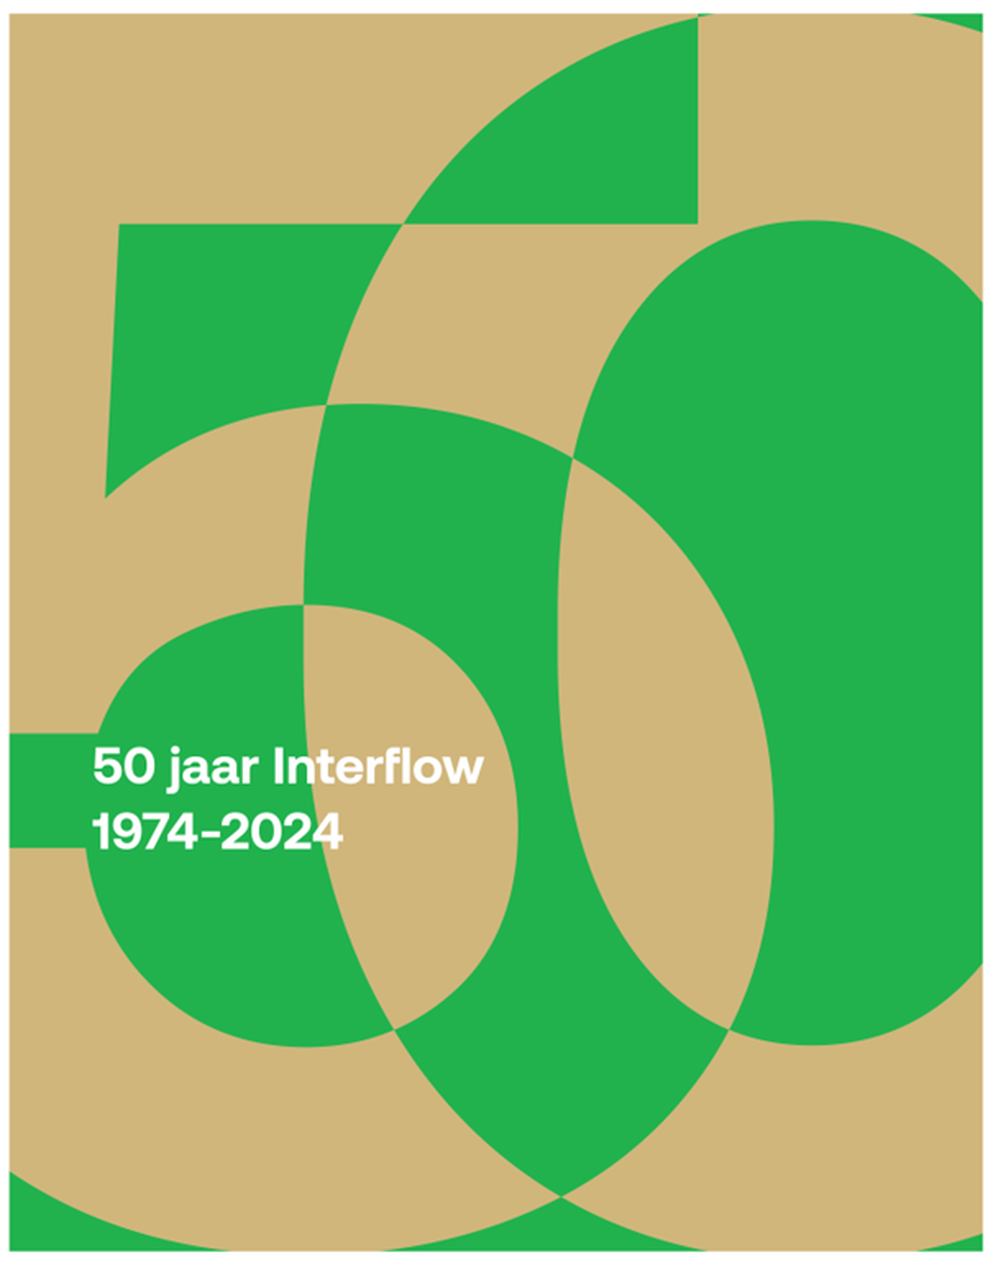 Interflow 50th anniversary